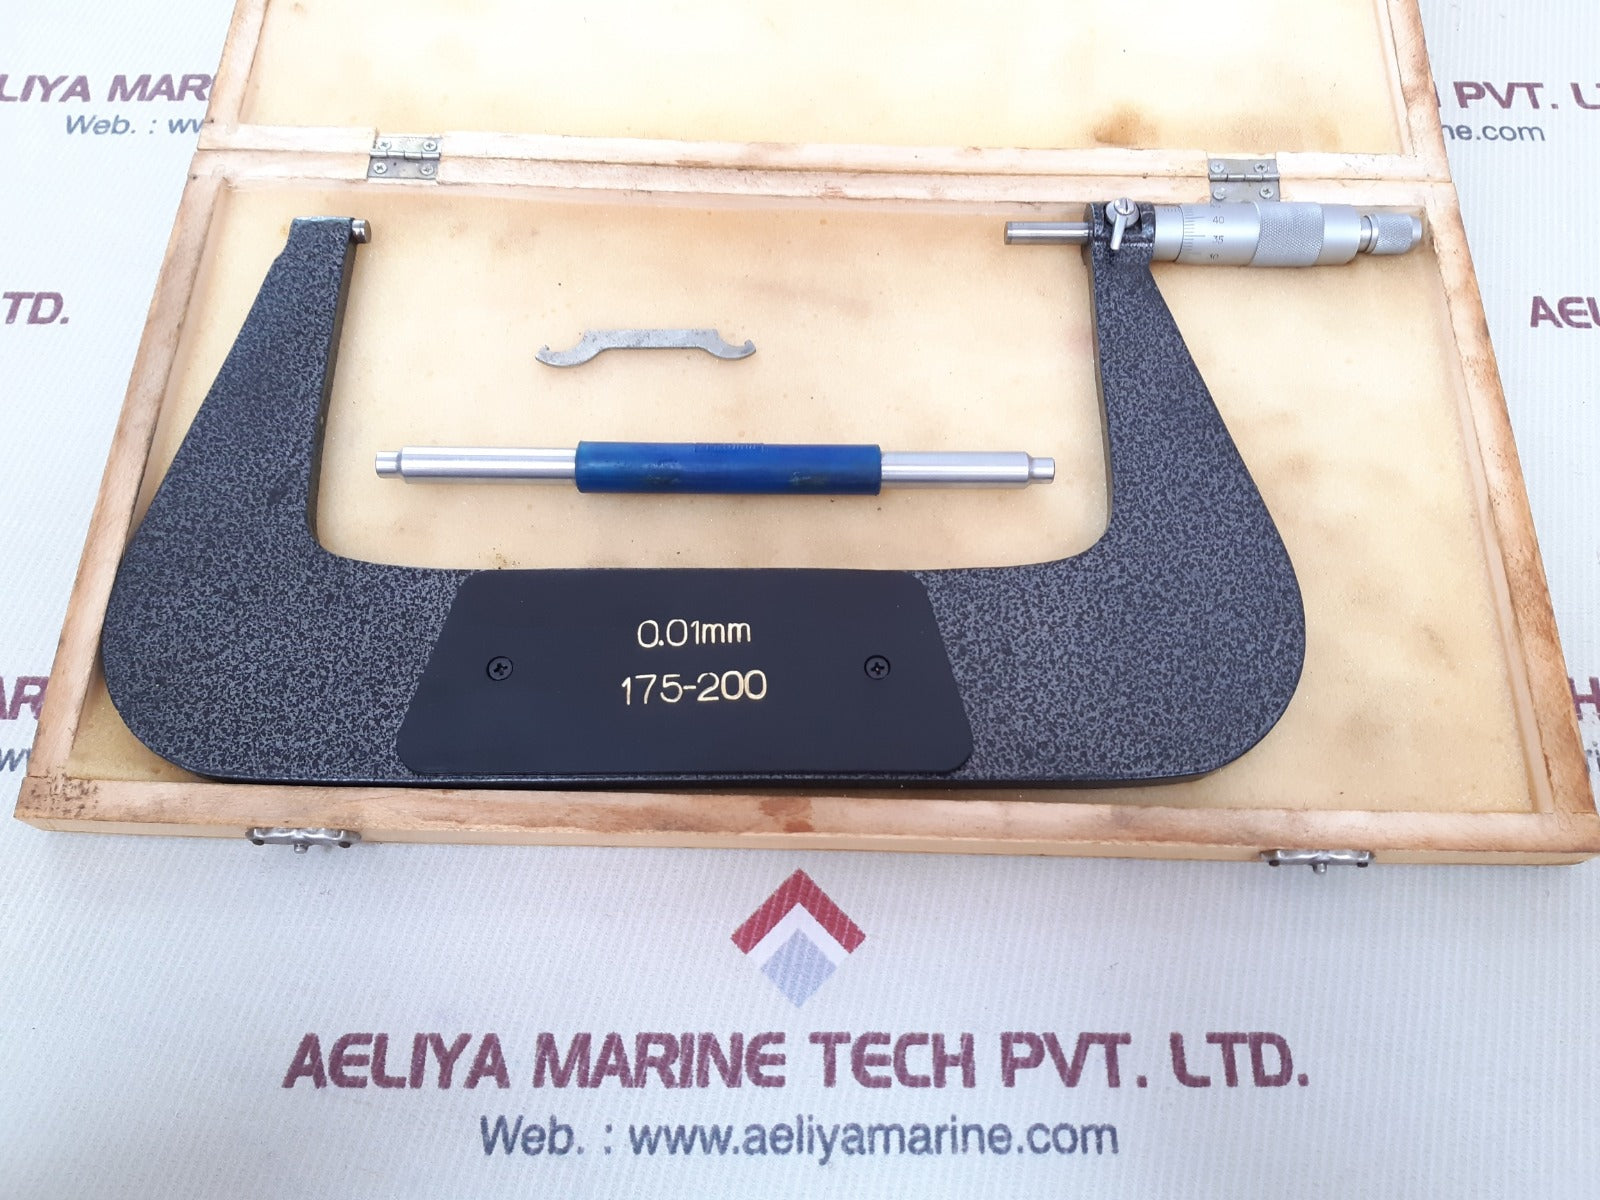 0.01 mm 175-200 mm external micrometer